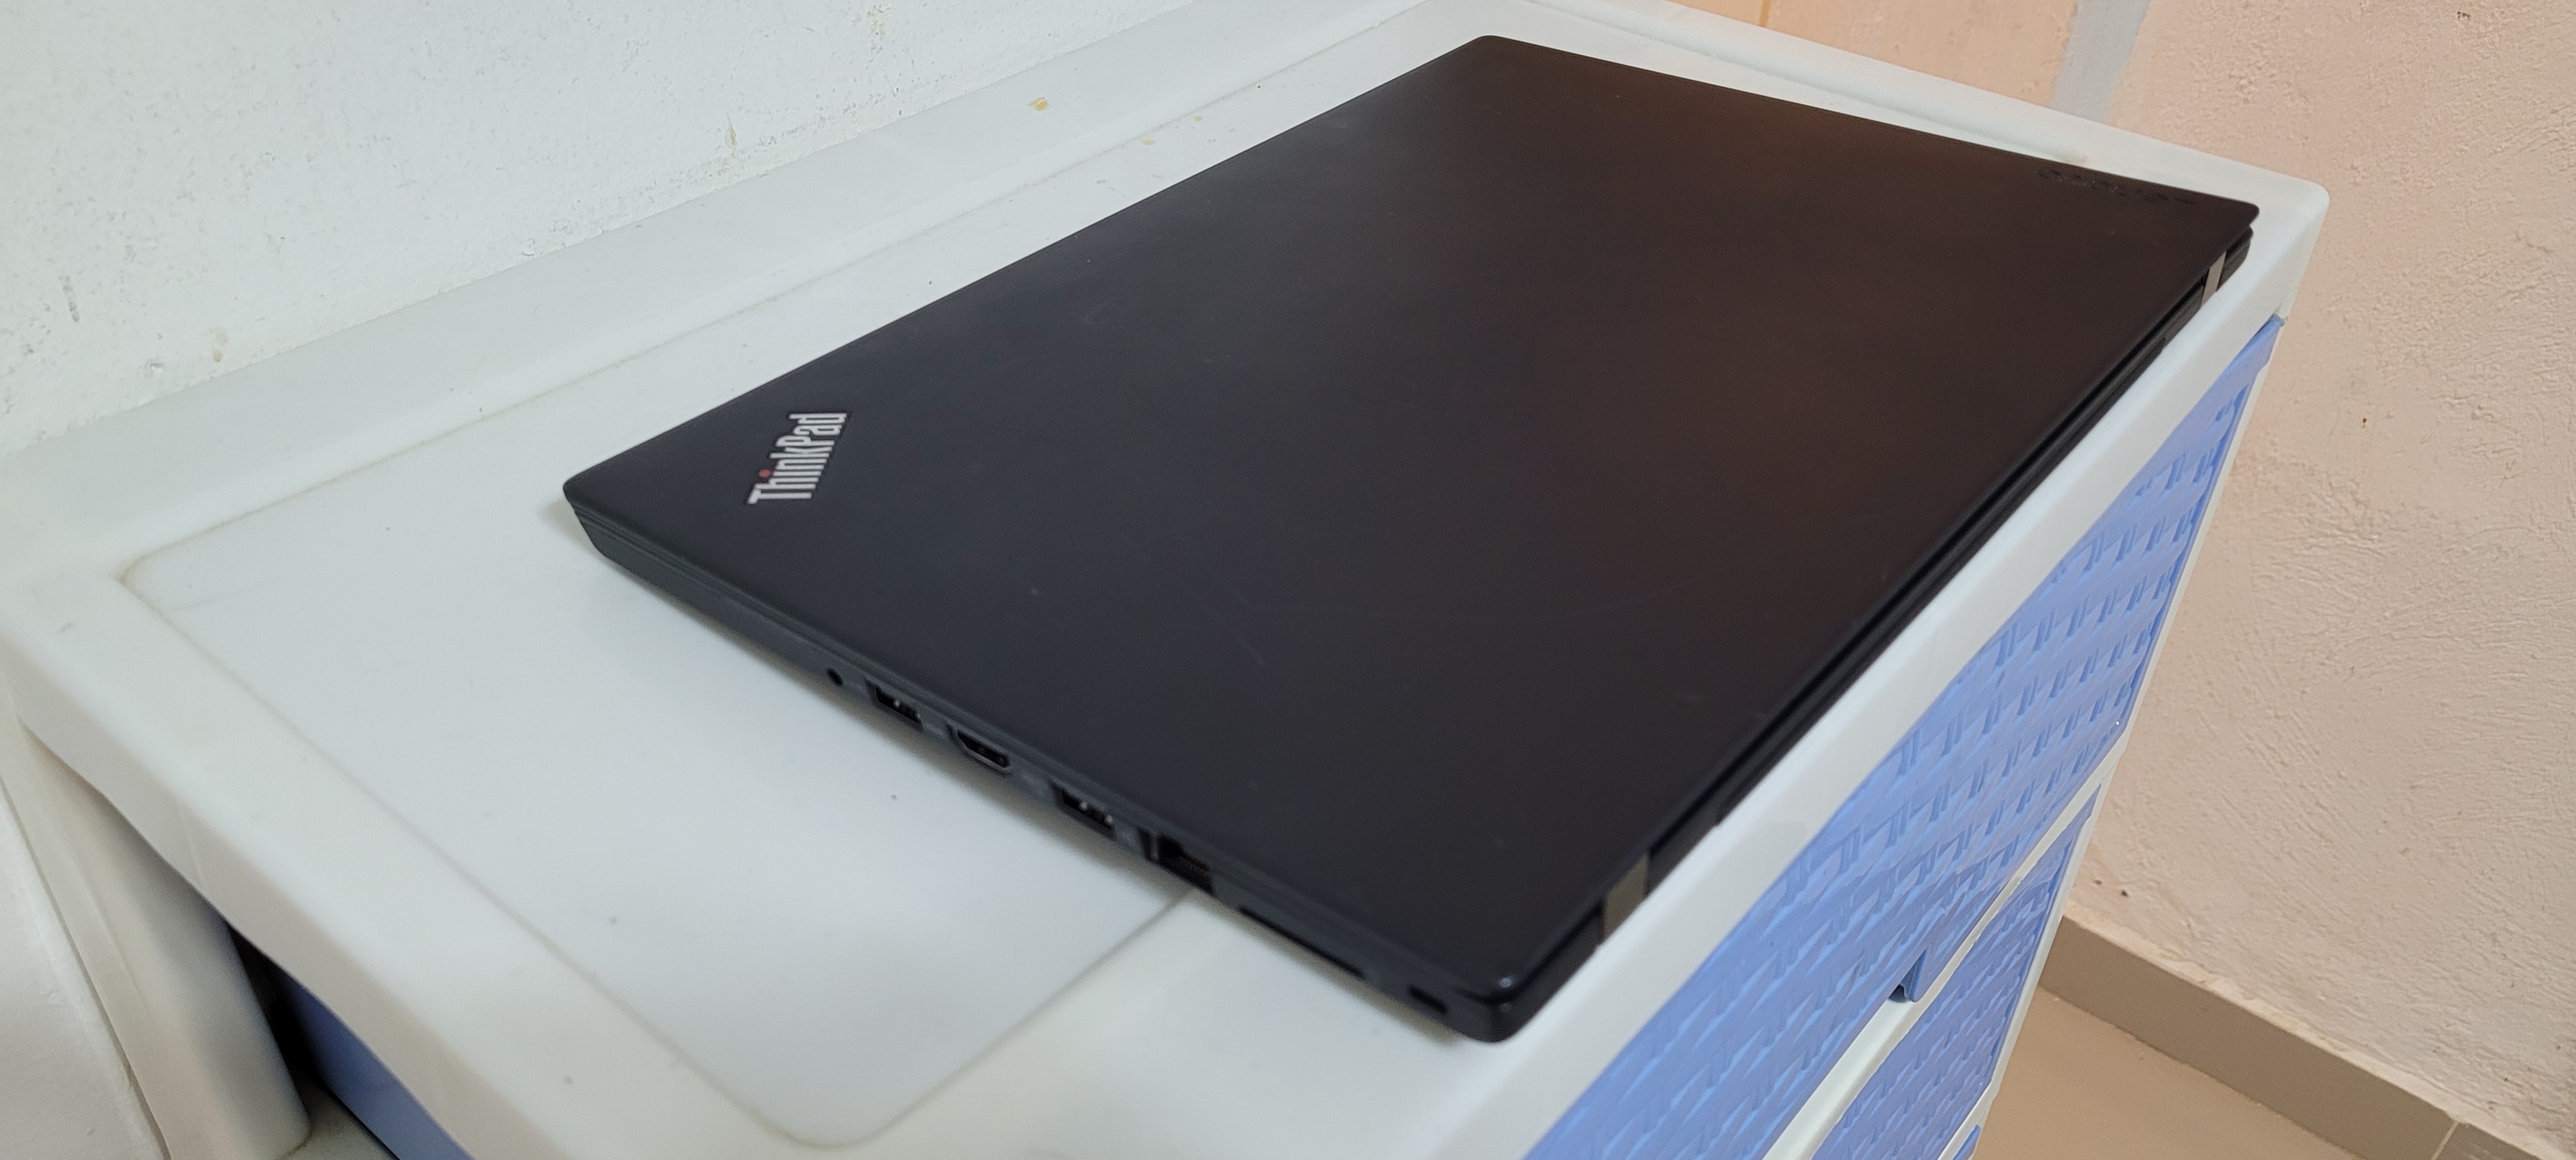 computadoras y laptops - Laptop lenovo T450s 14 Pulg Core i7 Ram 8gb Disco 256gb Solido New 2